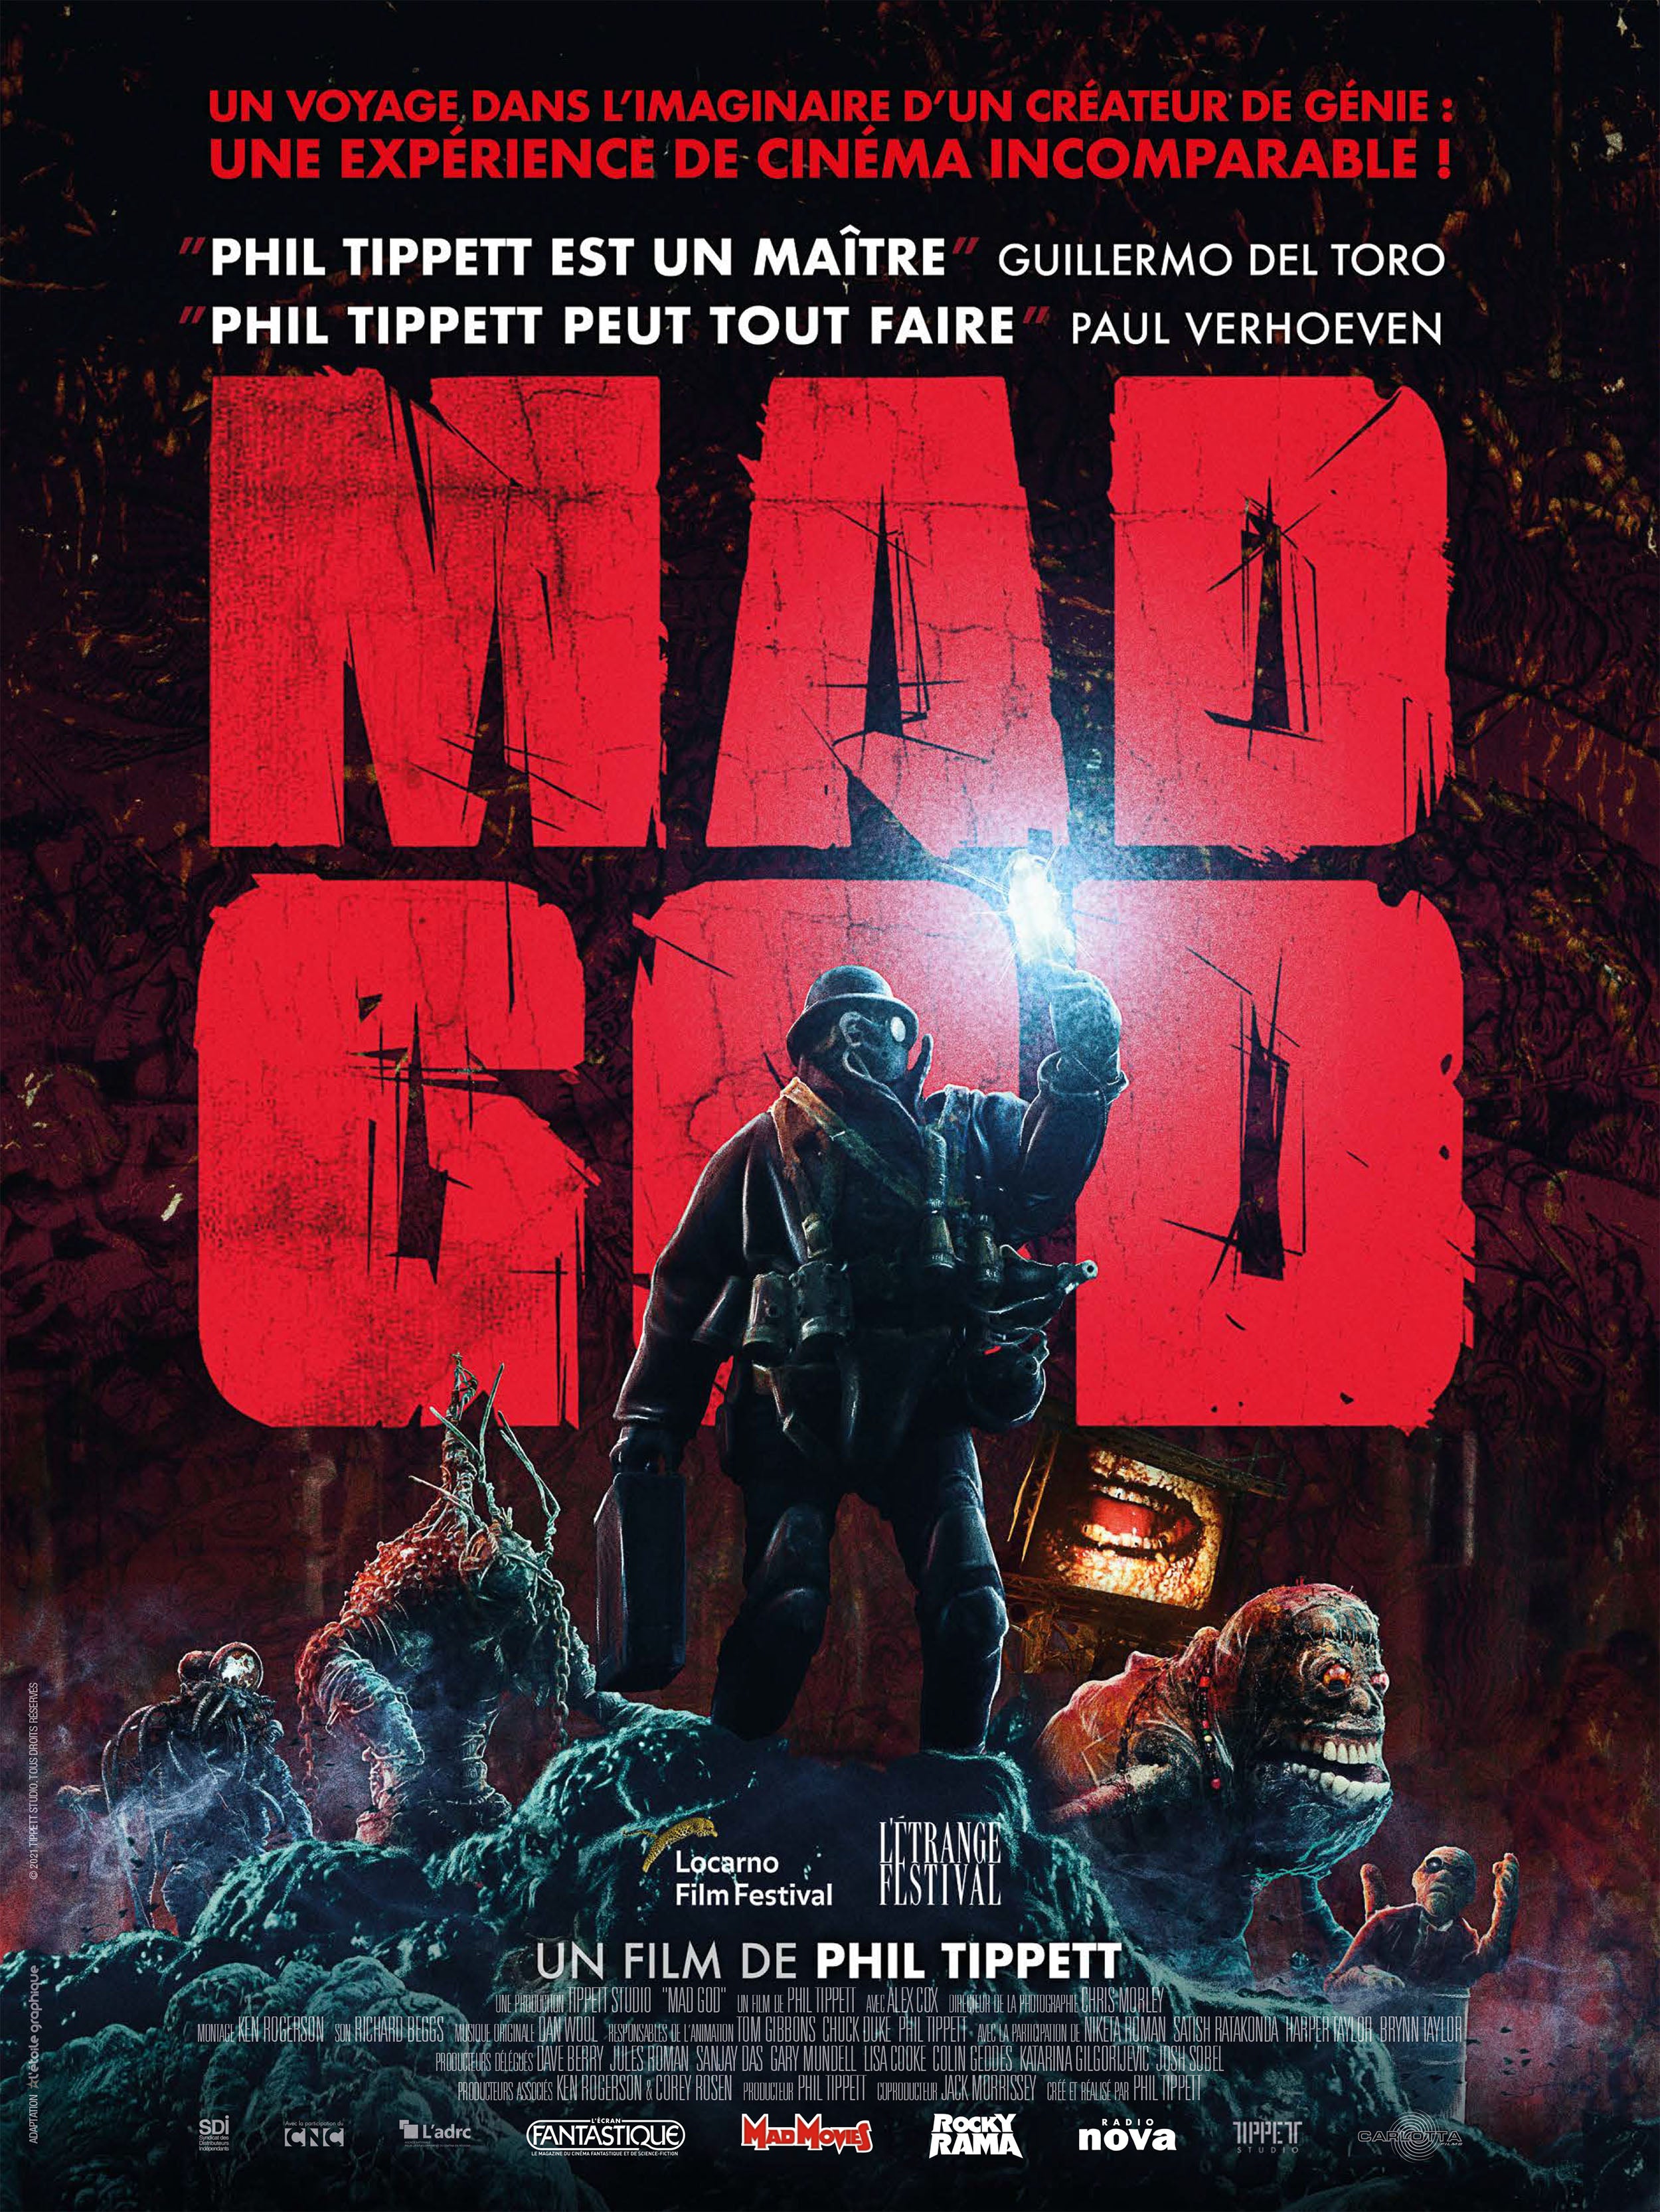 Mad God - Poster